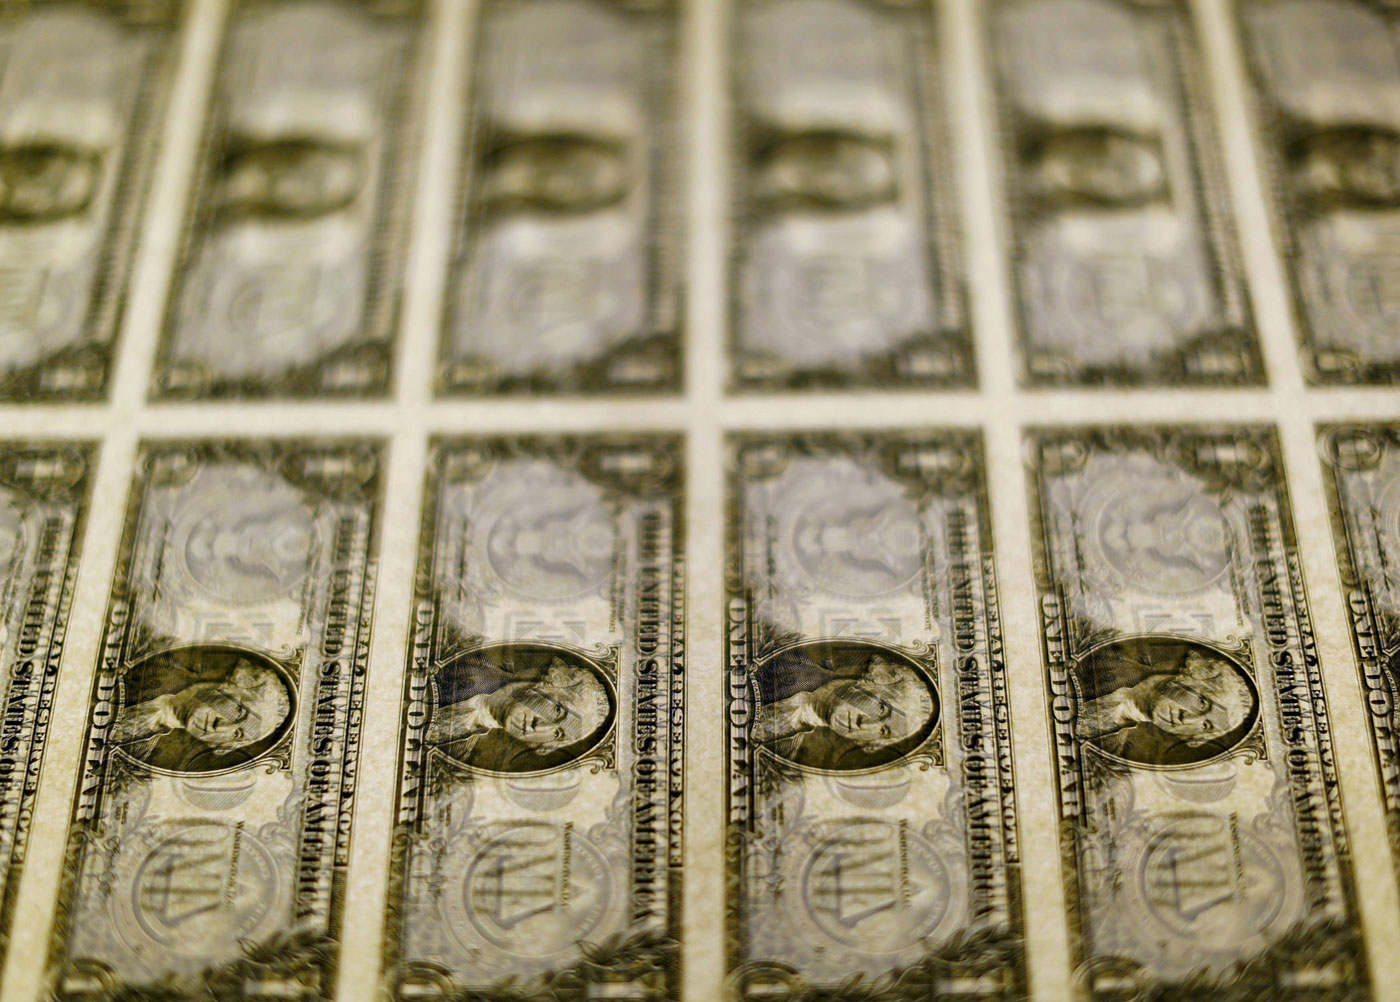 En dos meses el dólar “flotante” subió en promedio 3,38 bolívares diarios